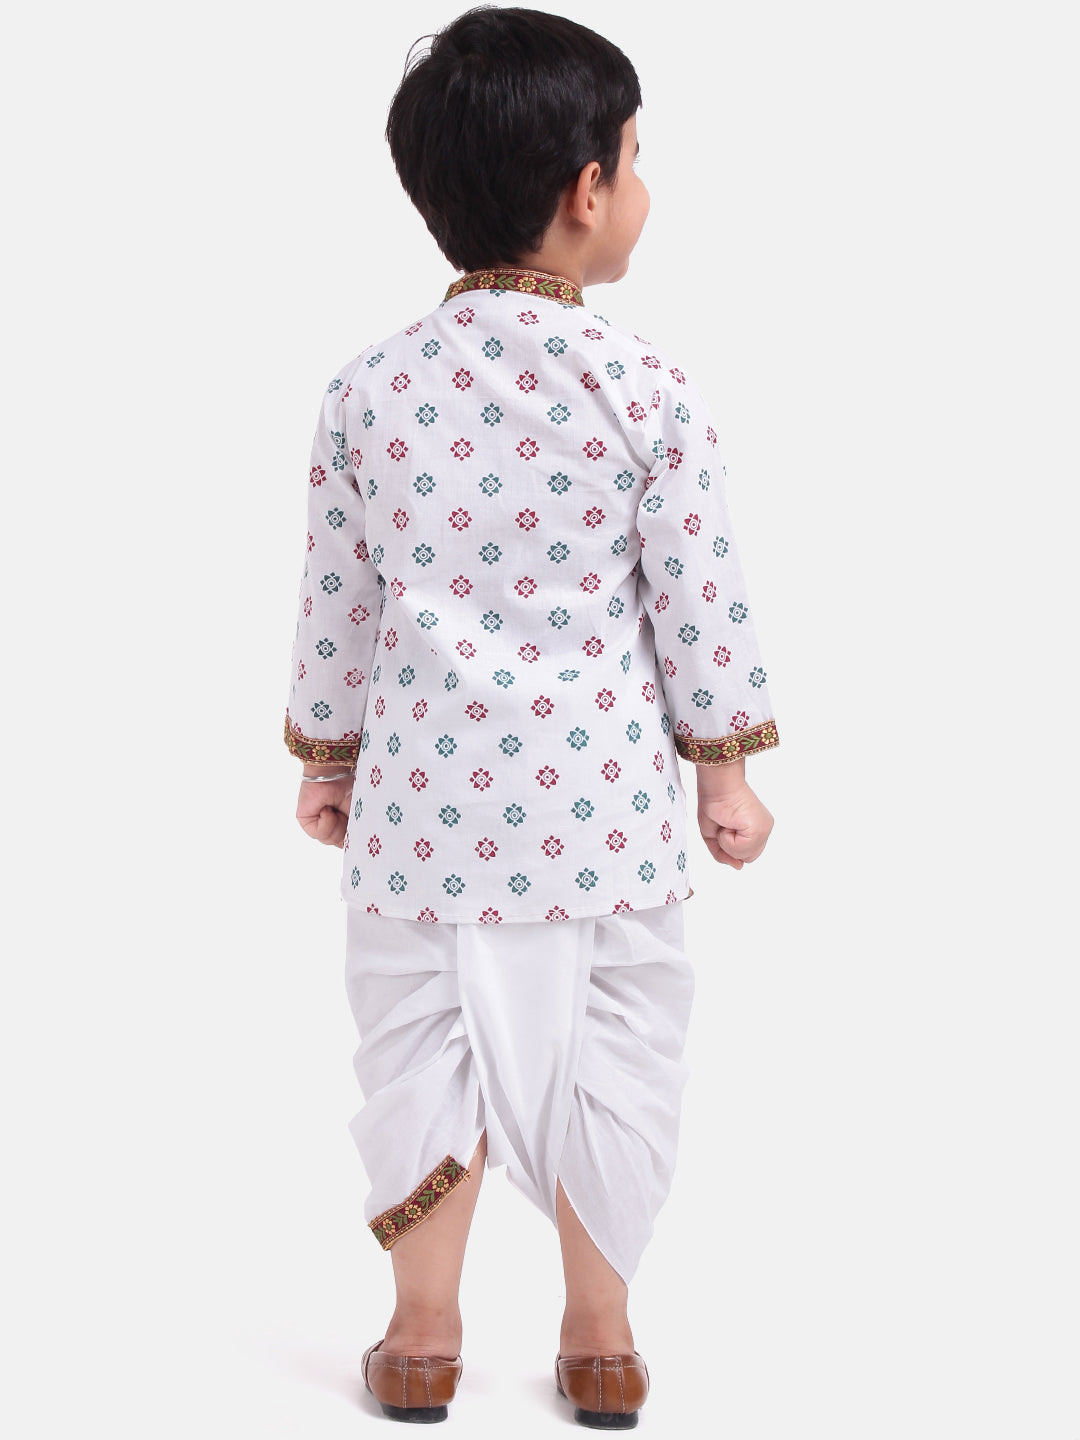 BownBee Cotton Kanhaiya Suit Dress For Baby Boy- White